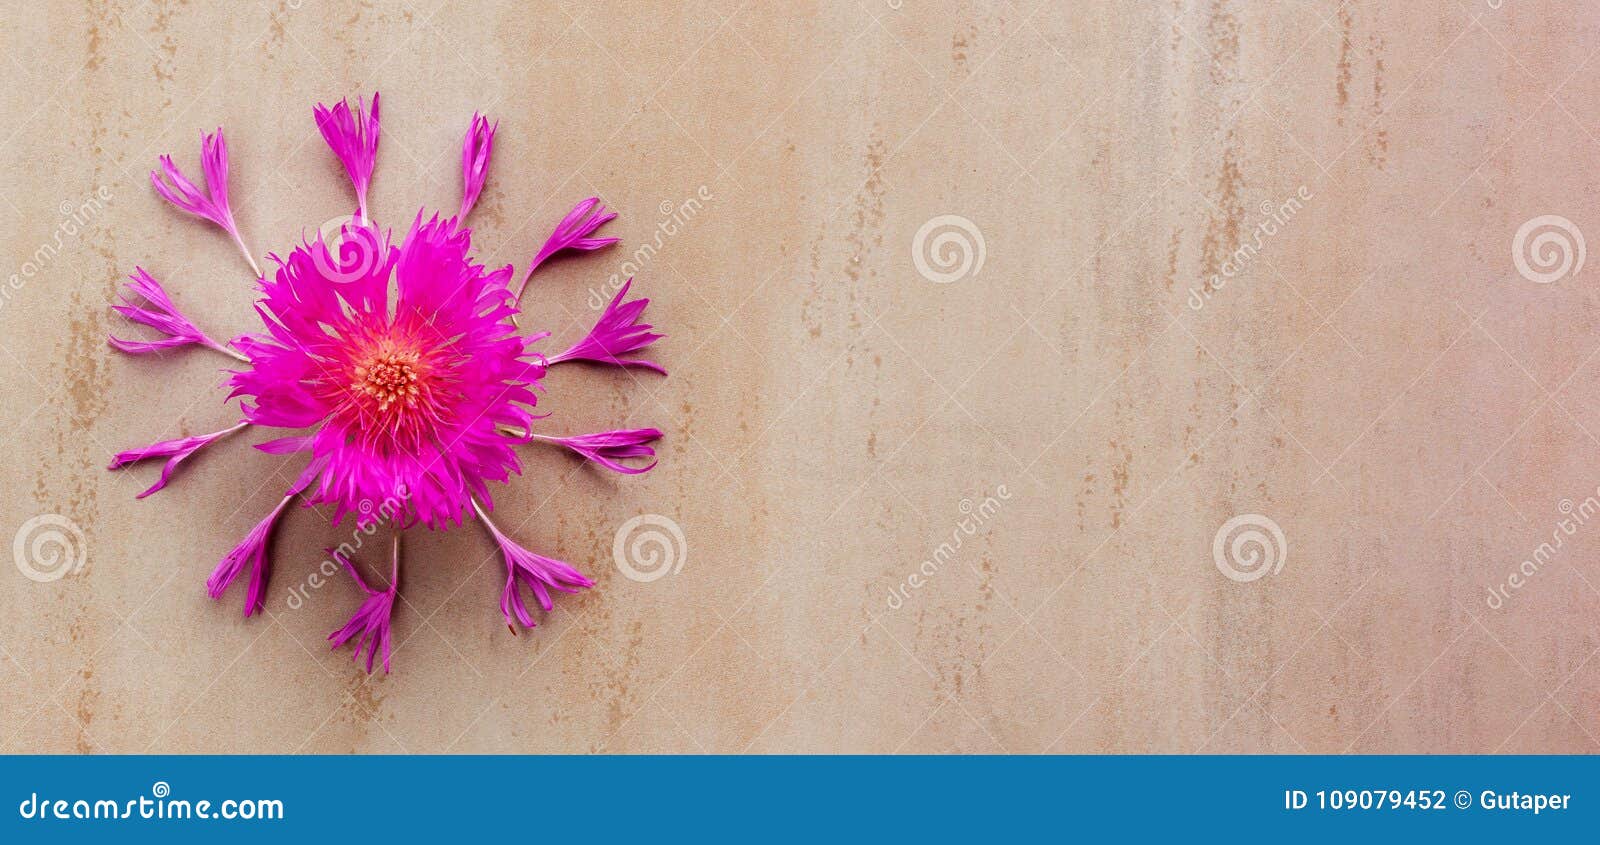 Background Flower Cornflower Petals Around Stock Photo - Image of pink ...